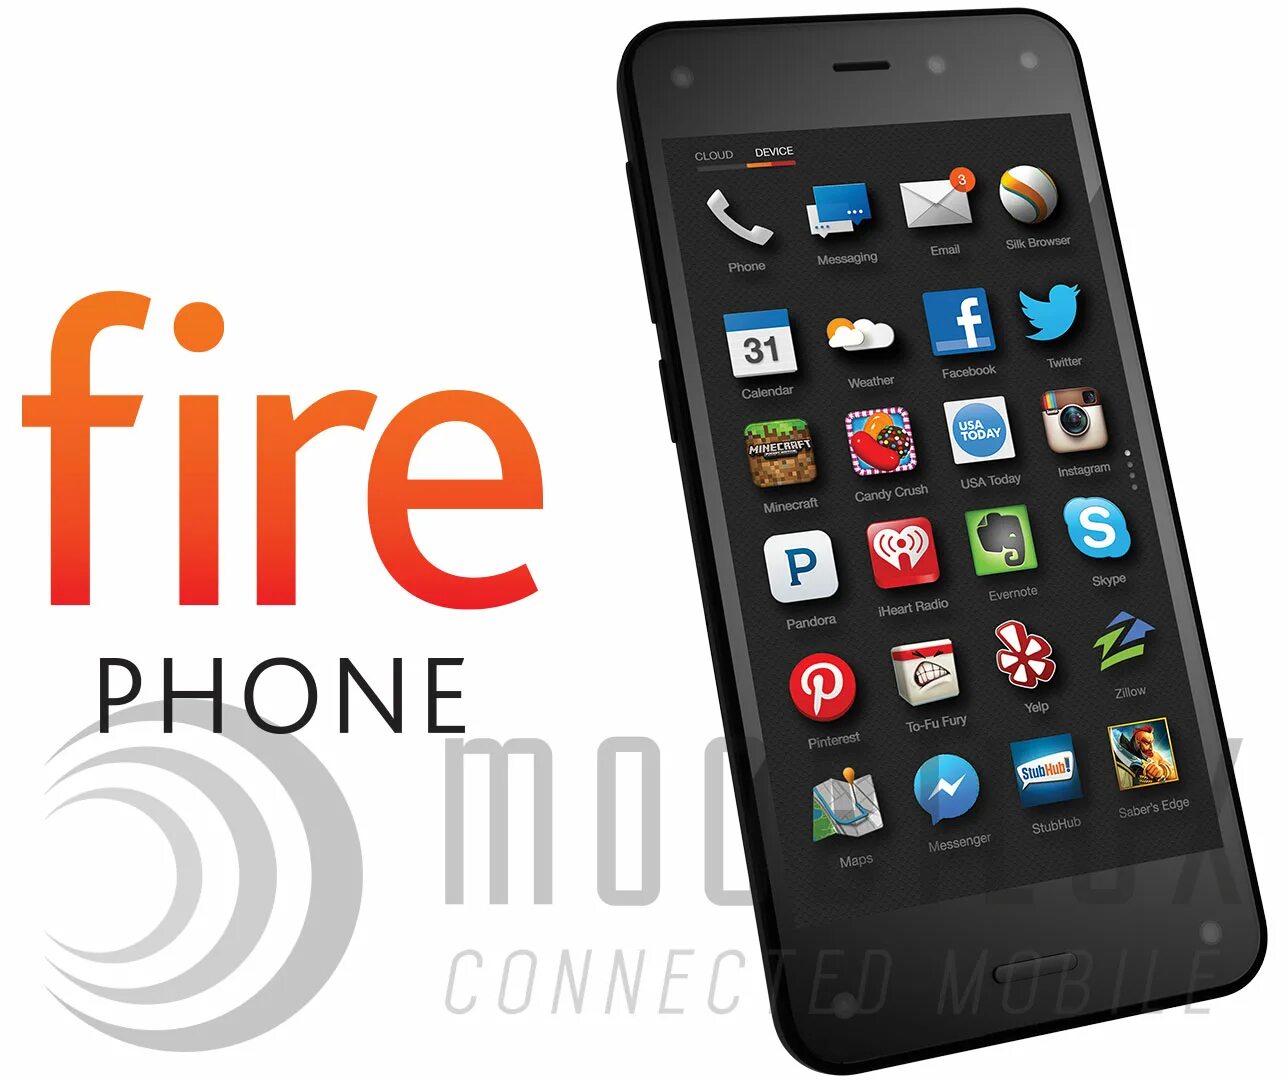 Fire unlock. Fire Phone. Amazon Fire Phone. Amazon Fire 11. Fire Phone PNG.